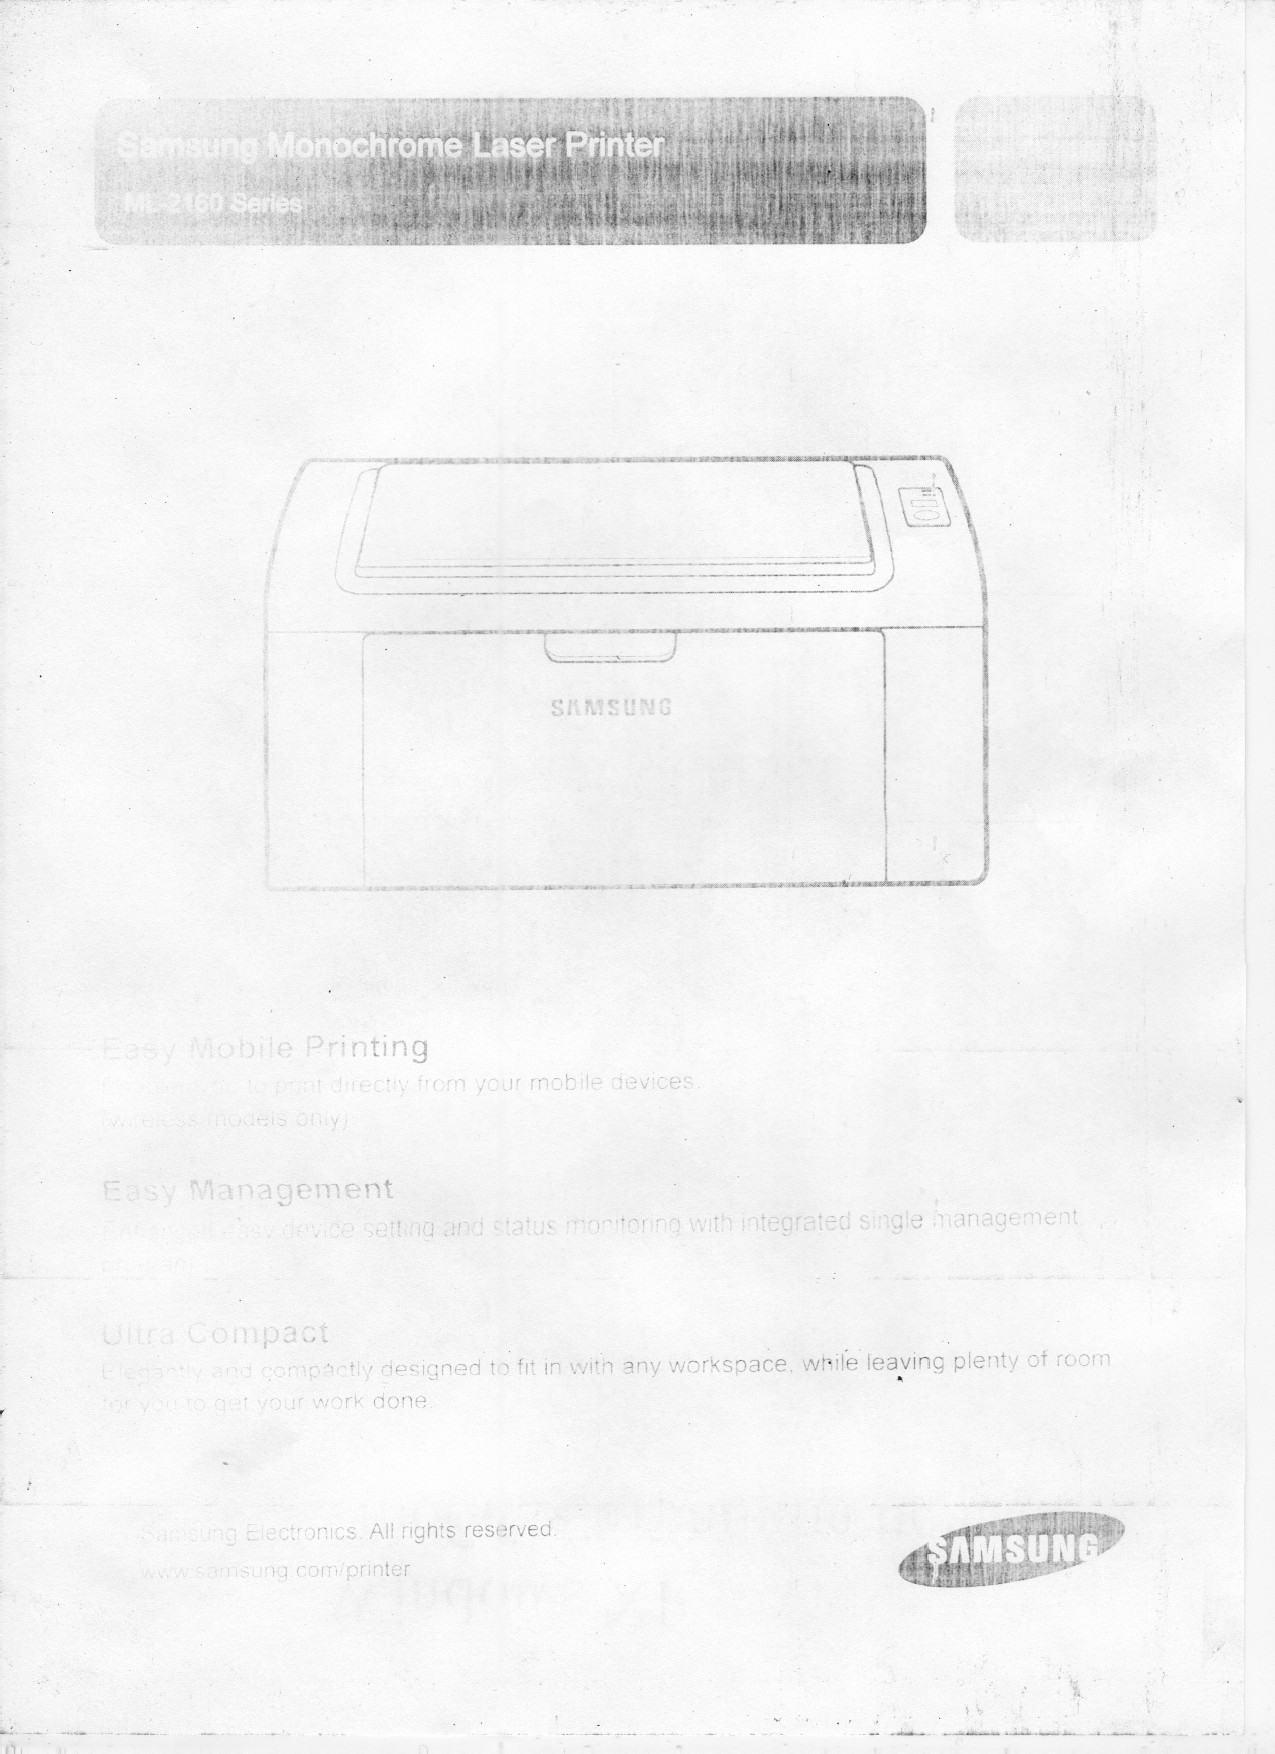 Принтер Mimaki тускло печатает